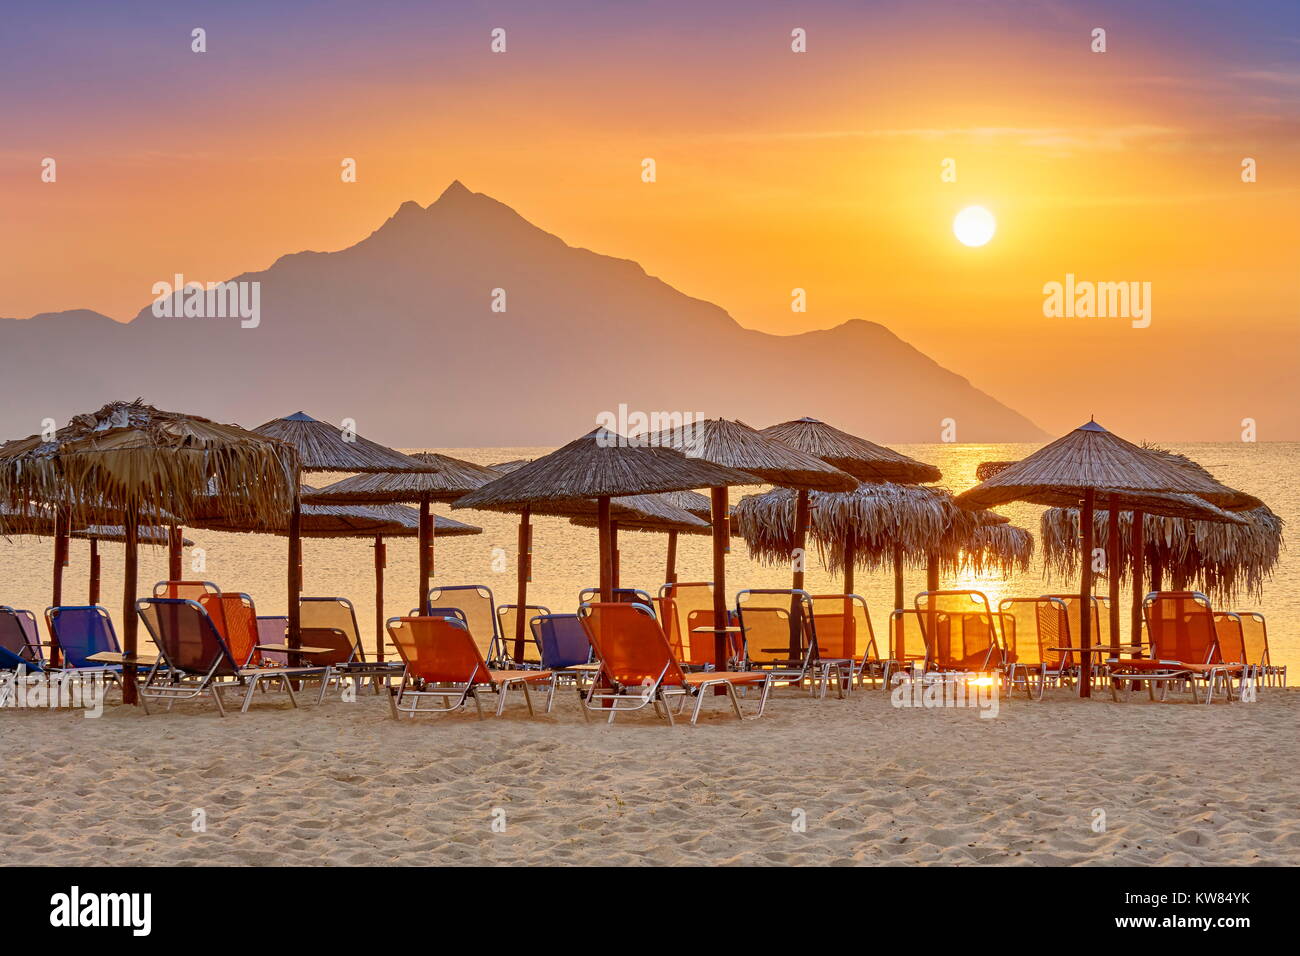 Sunrise at Halkidiki (or Chalkidiki) Beach, Mount Athos in the background, Greece Stock Photo